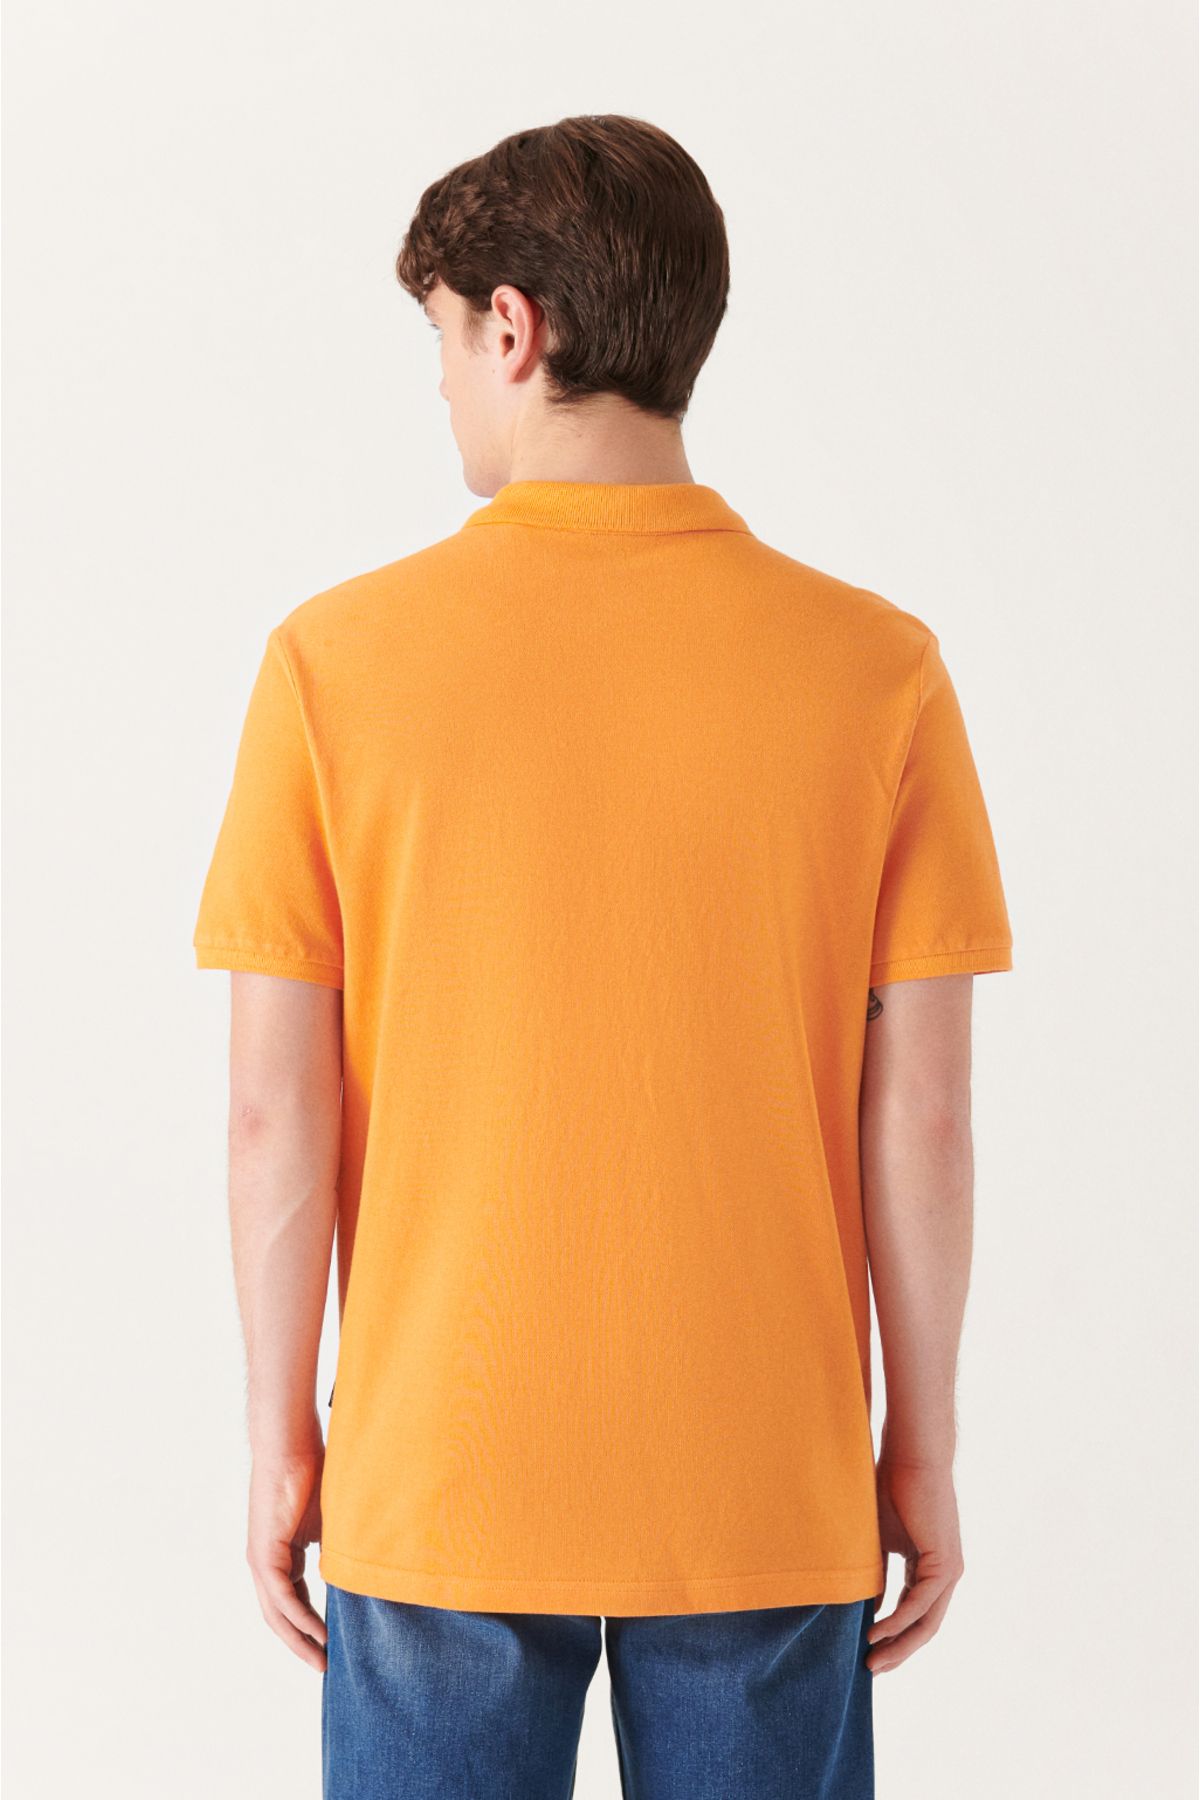 Avva تیشرت مردانه نارنجی 100% پنبه خنک با تناسب استاندارد برش معمولی یقه پولو E001004